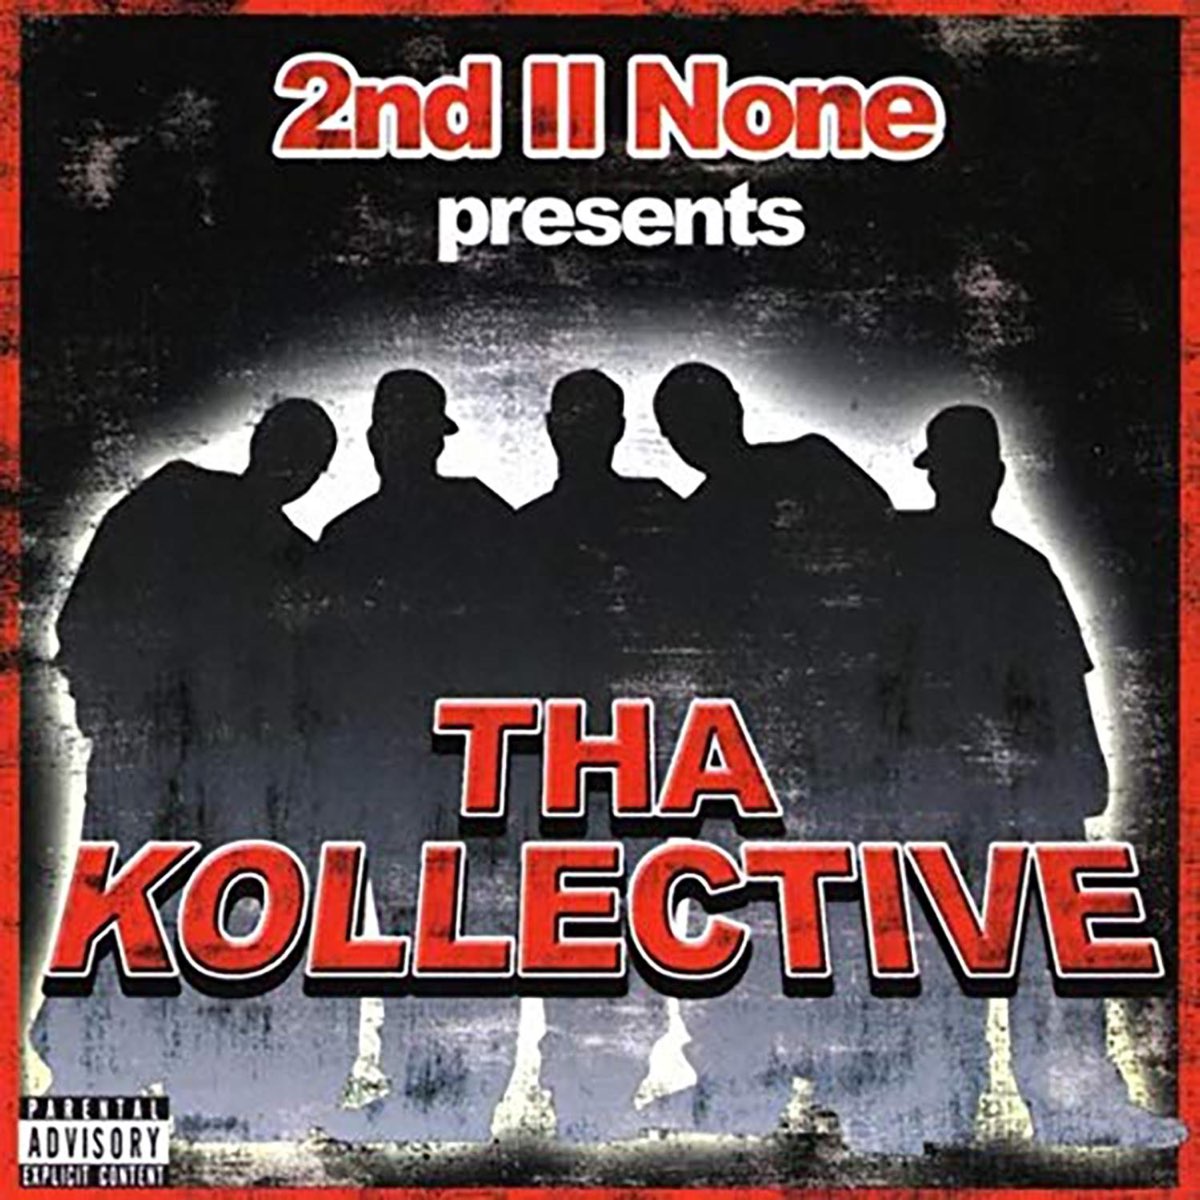 2nd II None Presents tha Kollective - Album by 2nd II None - Apple